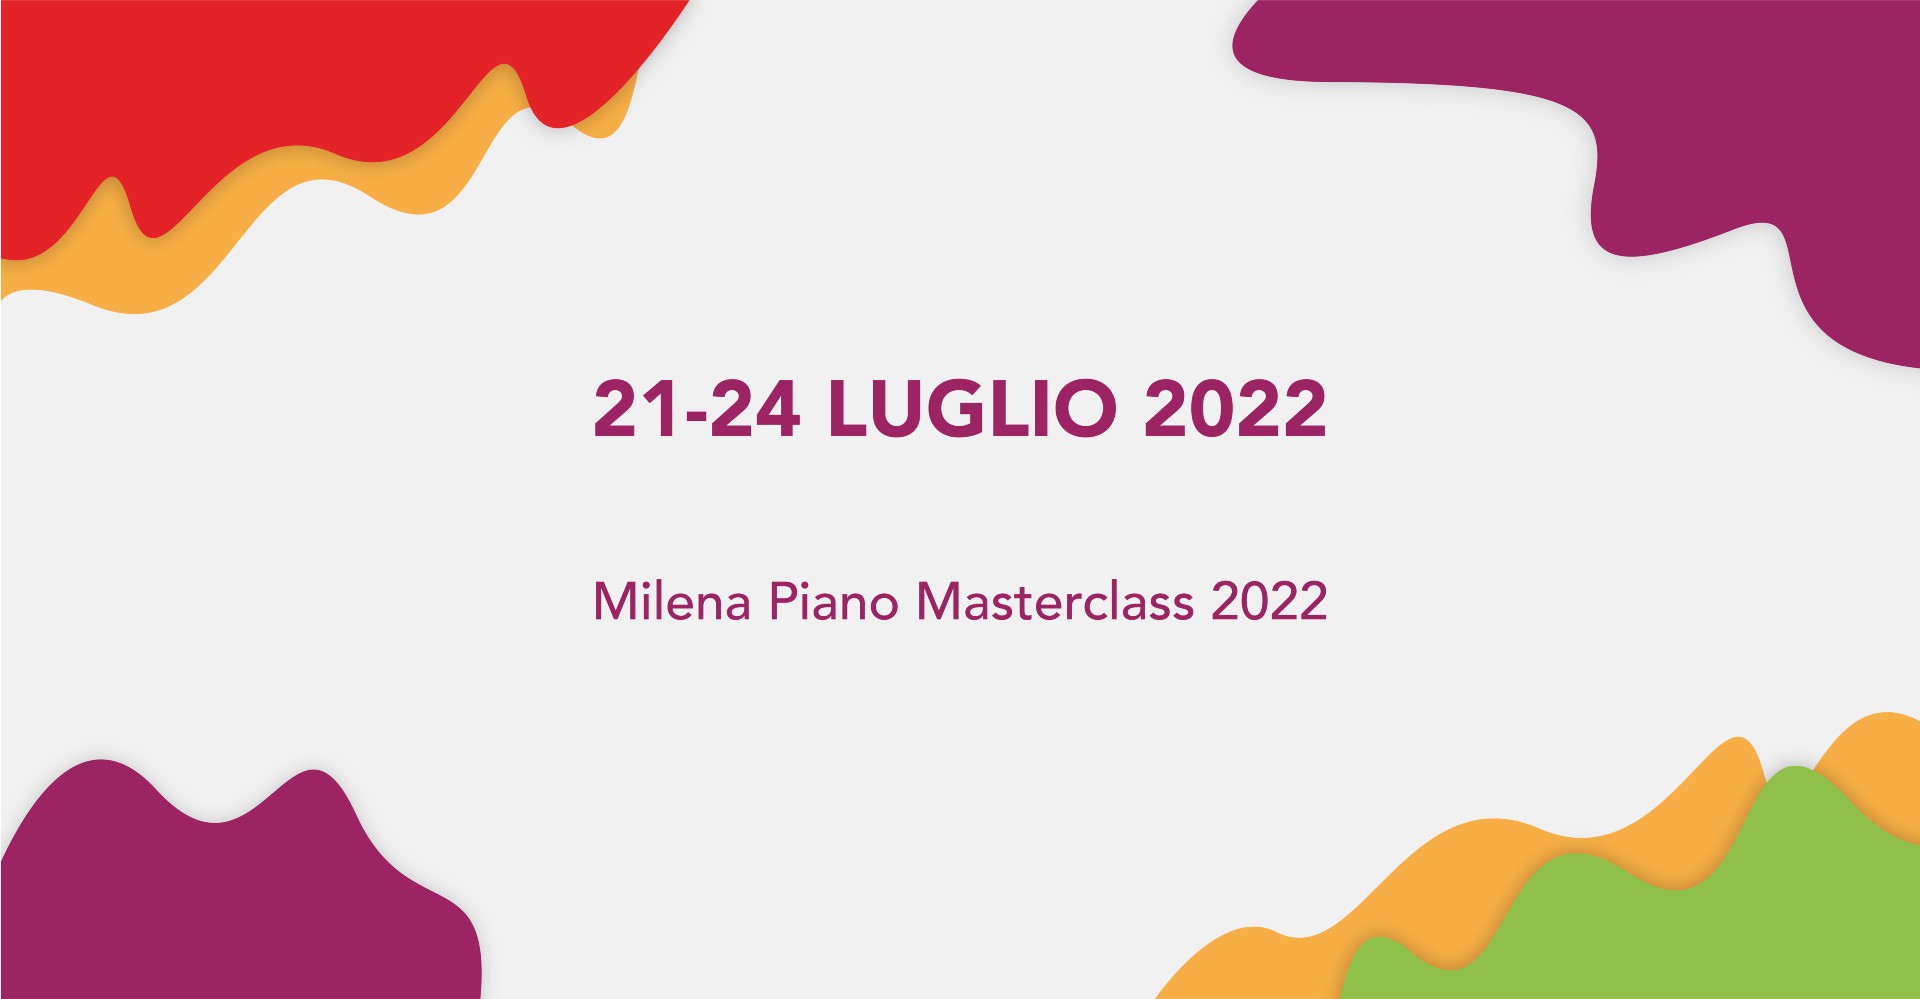 MILENA PIANO MASTERCLASS 2022